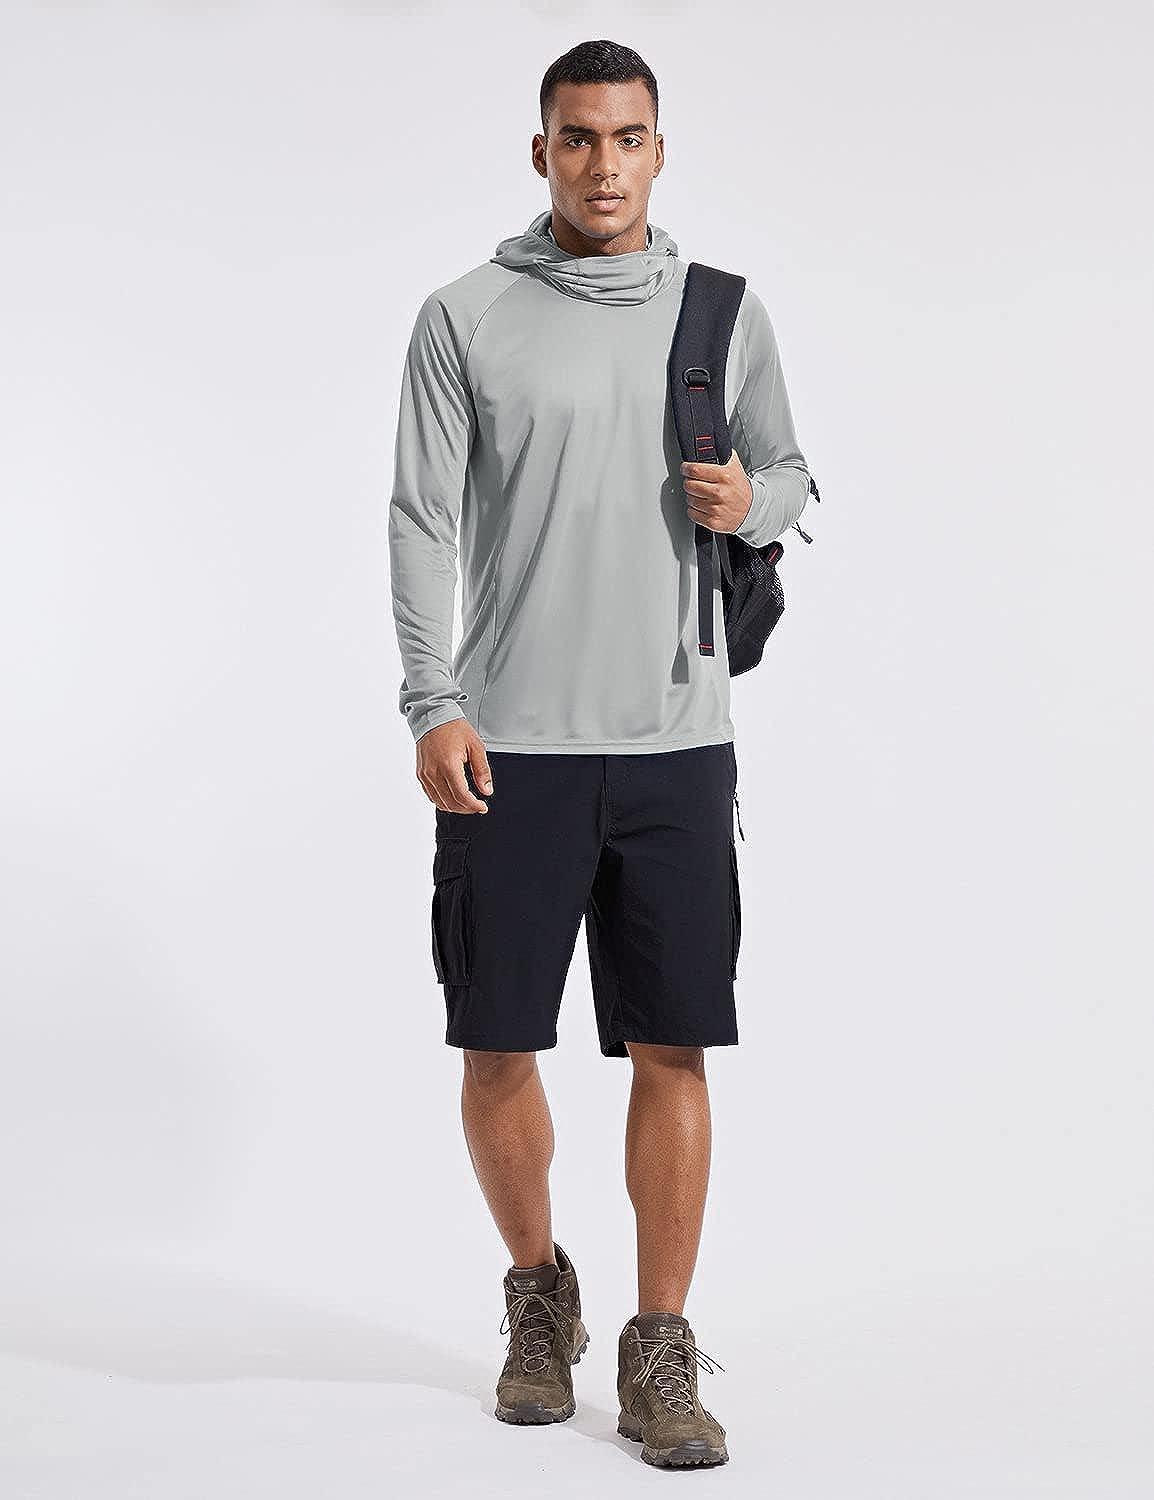 BALEAF Men's UPF 50+ Sun Protection Shirts Zip Pockets UV SPF Clothing Long  Sleeve Rash Guard Hiking Fishing Outdoor Quick Dry Lightweight Light Gray S